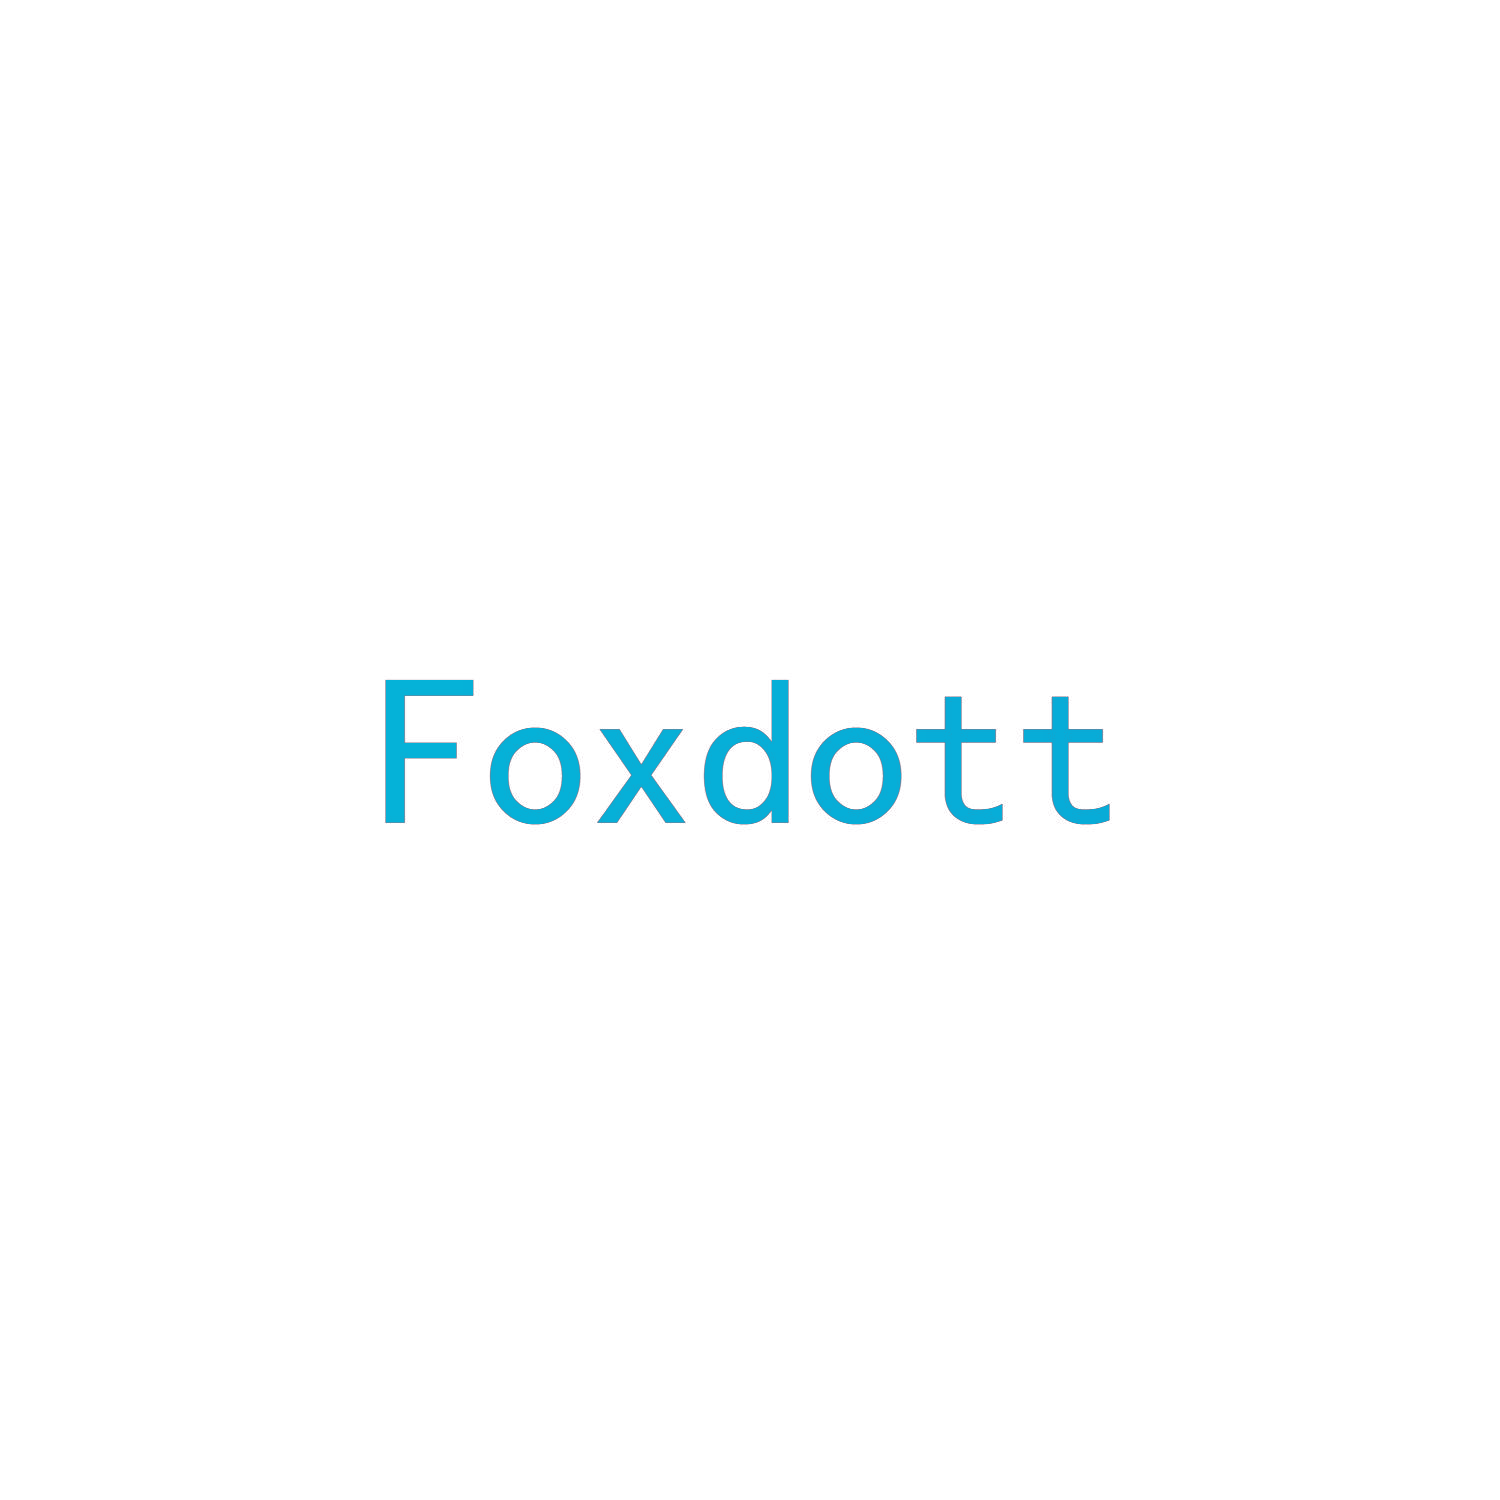 FOXDOTT